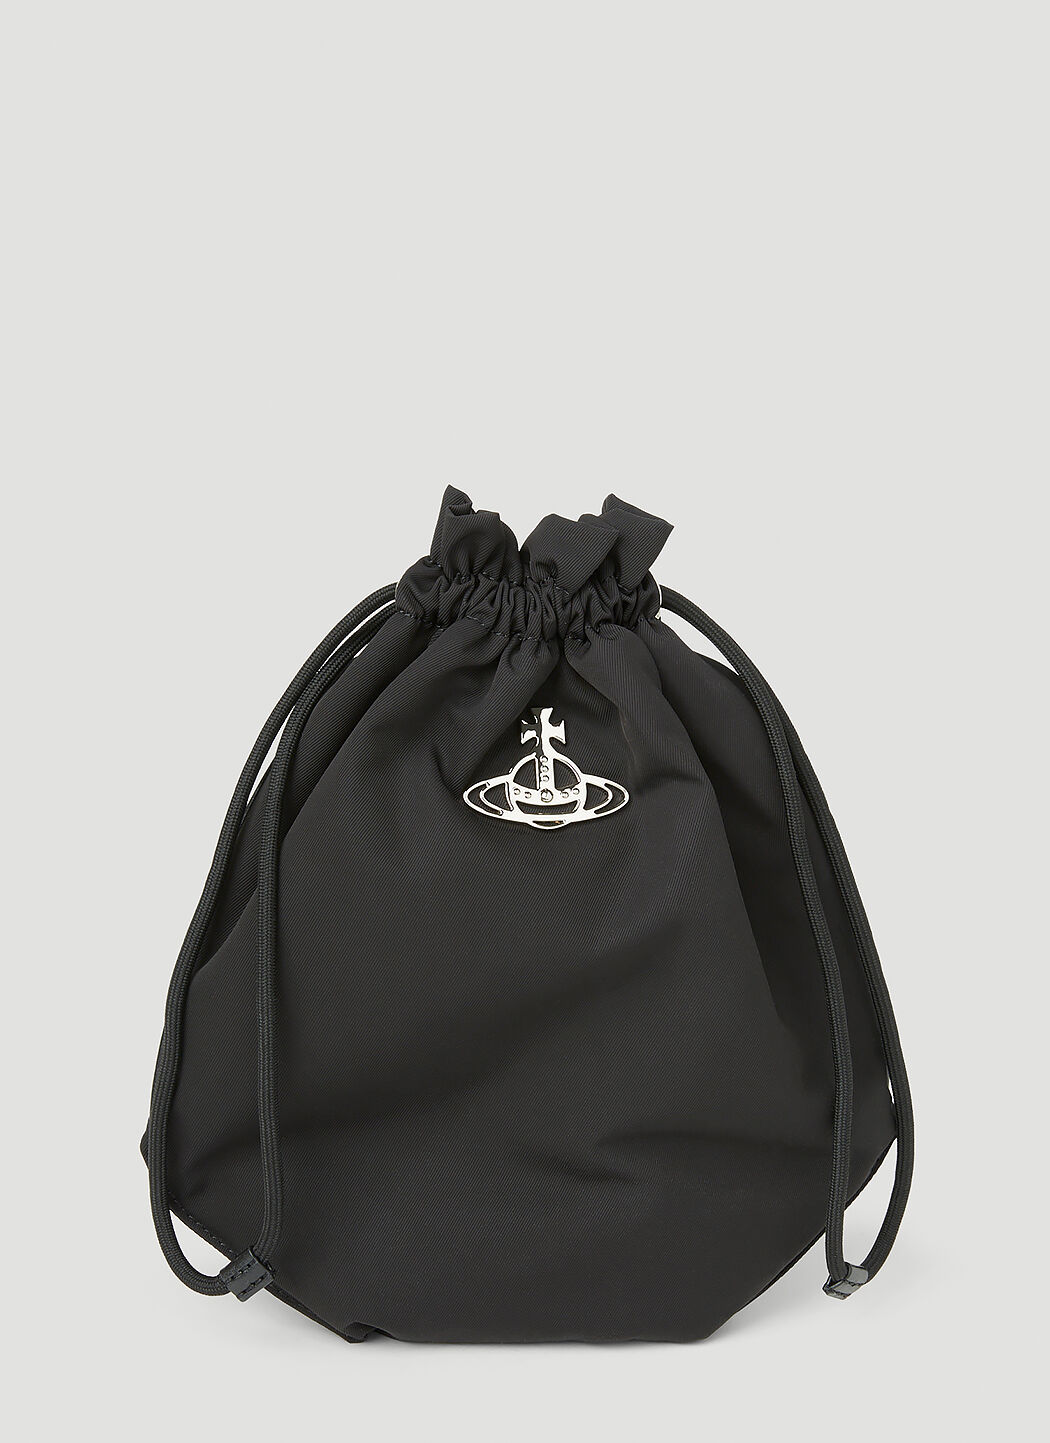 Vivienne Westwood Women's Re Nylon Drawstring Pouch Bag in Black